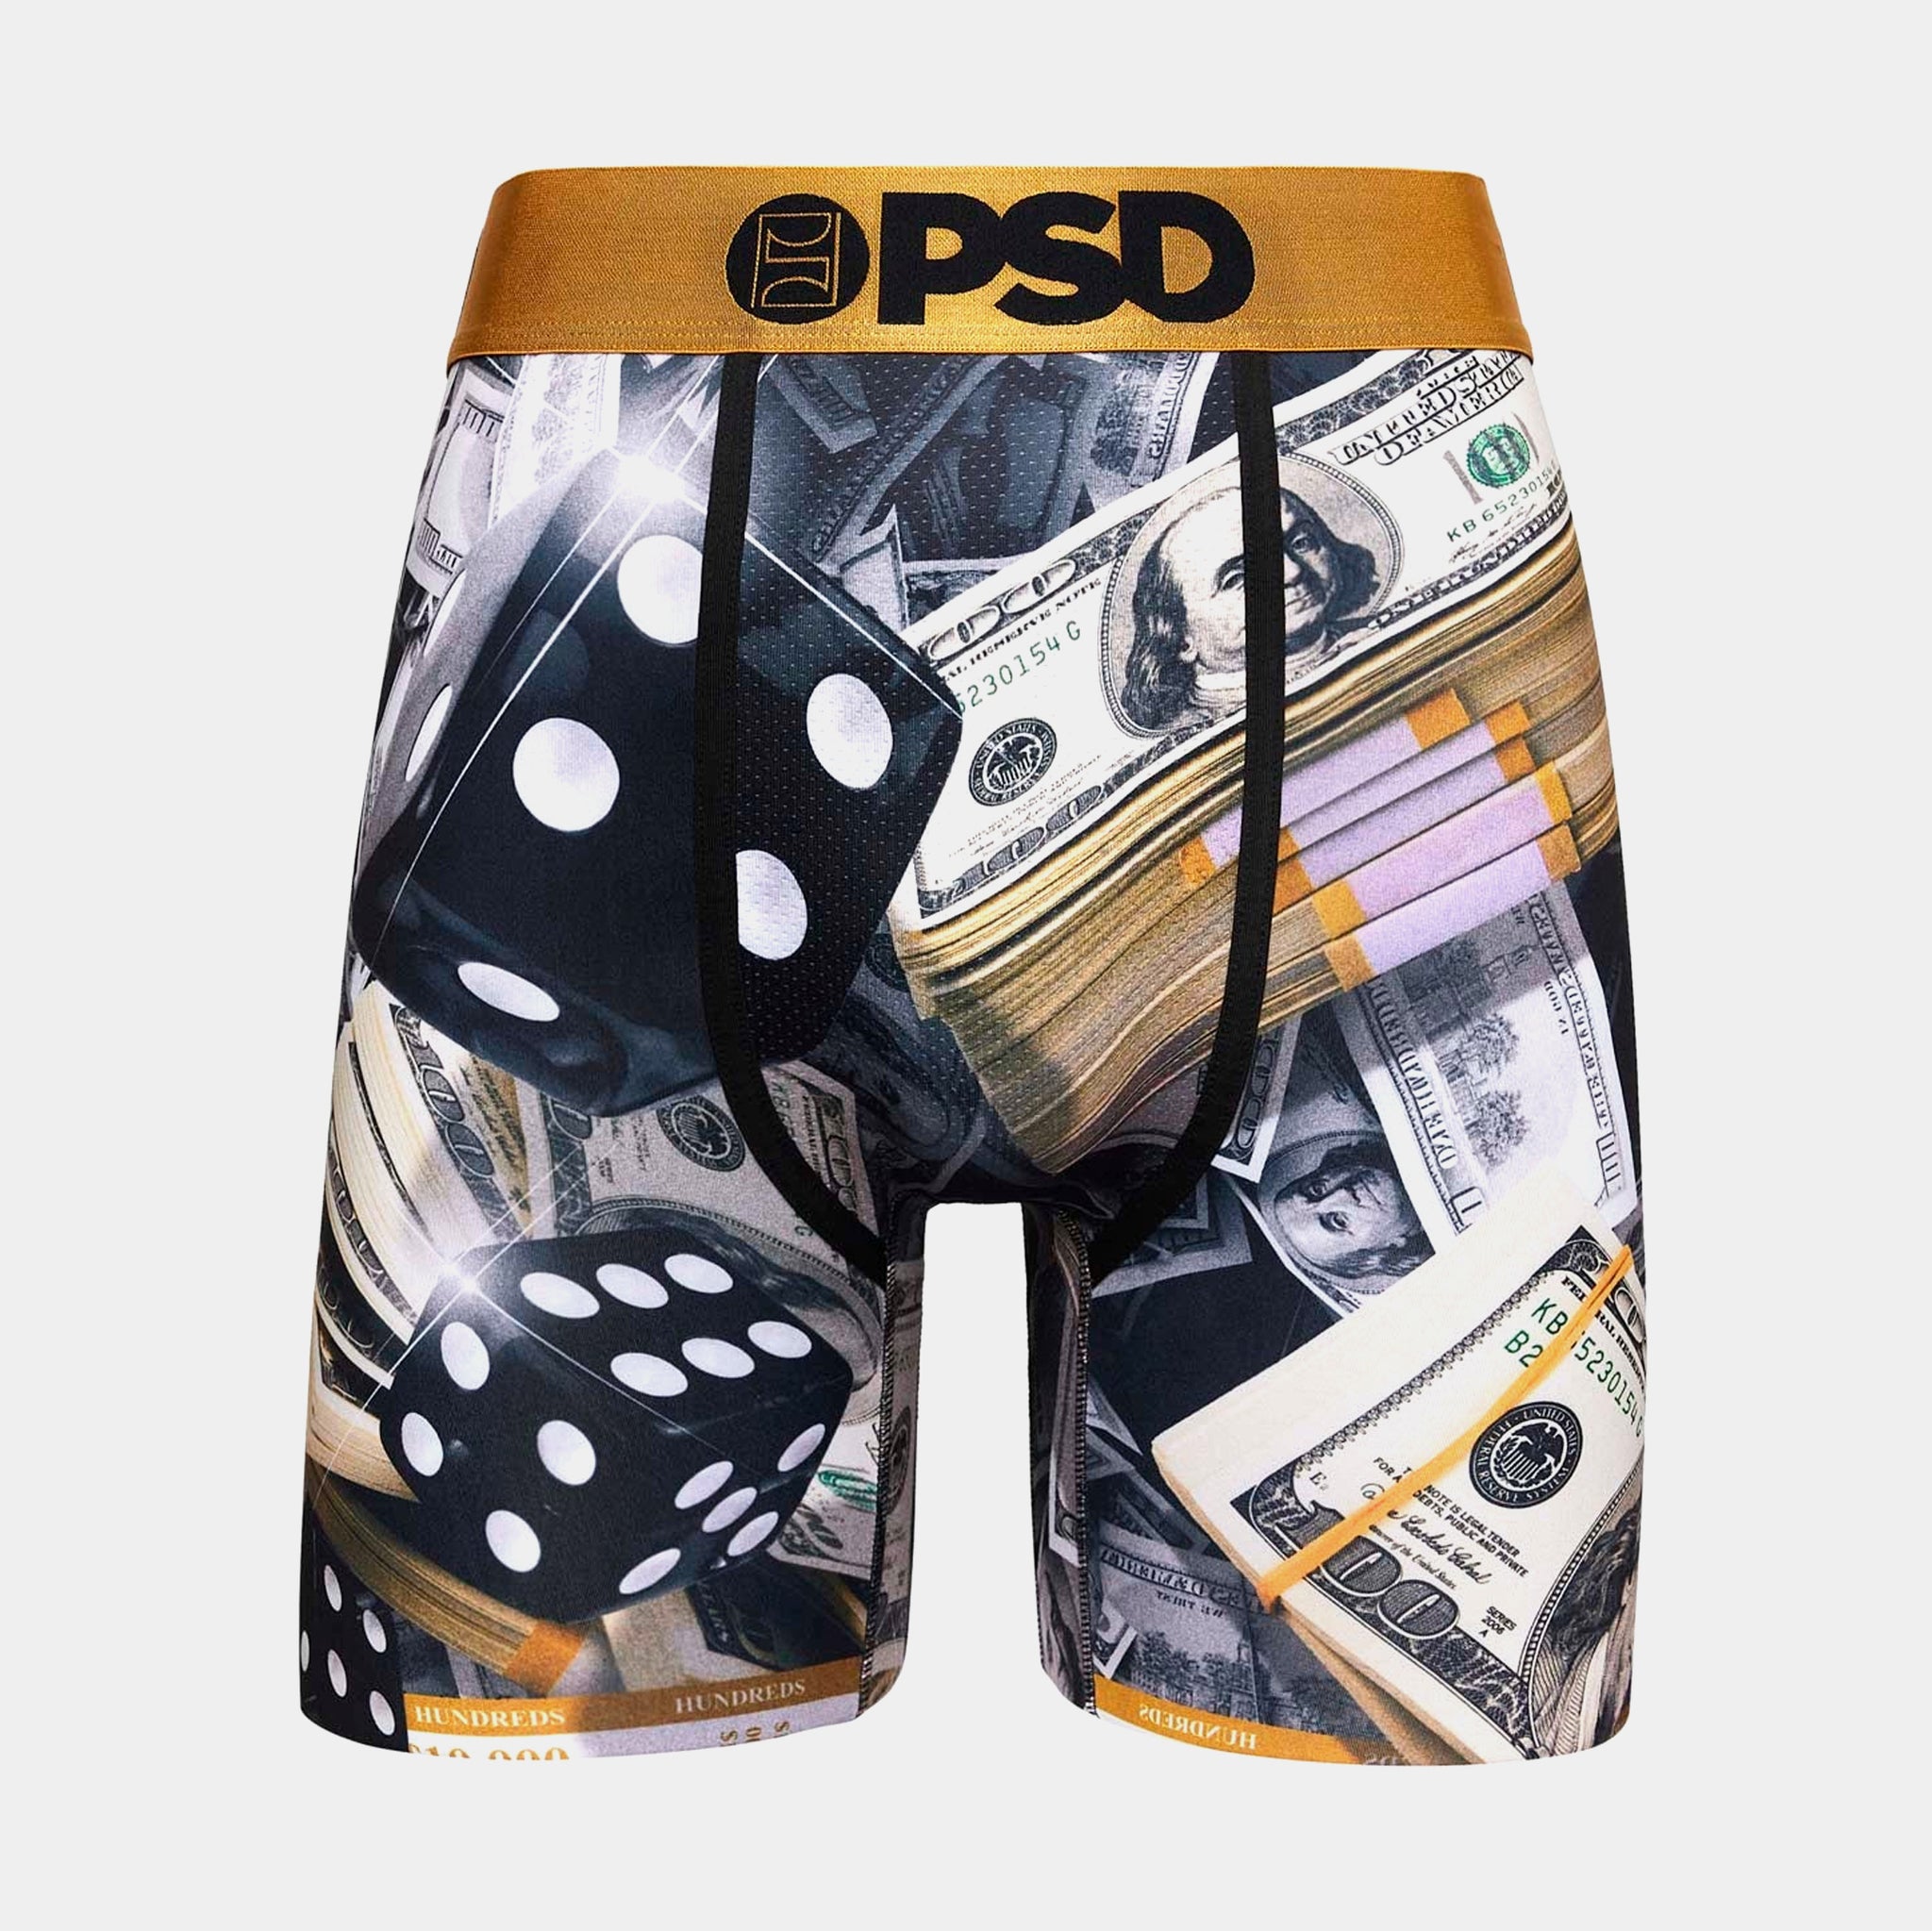 PSD Men's Multicolor Money Strike Boxer Briefs Underwear - 123180052-MUL